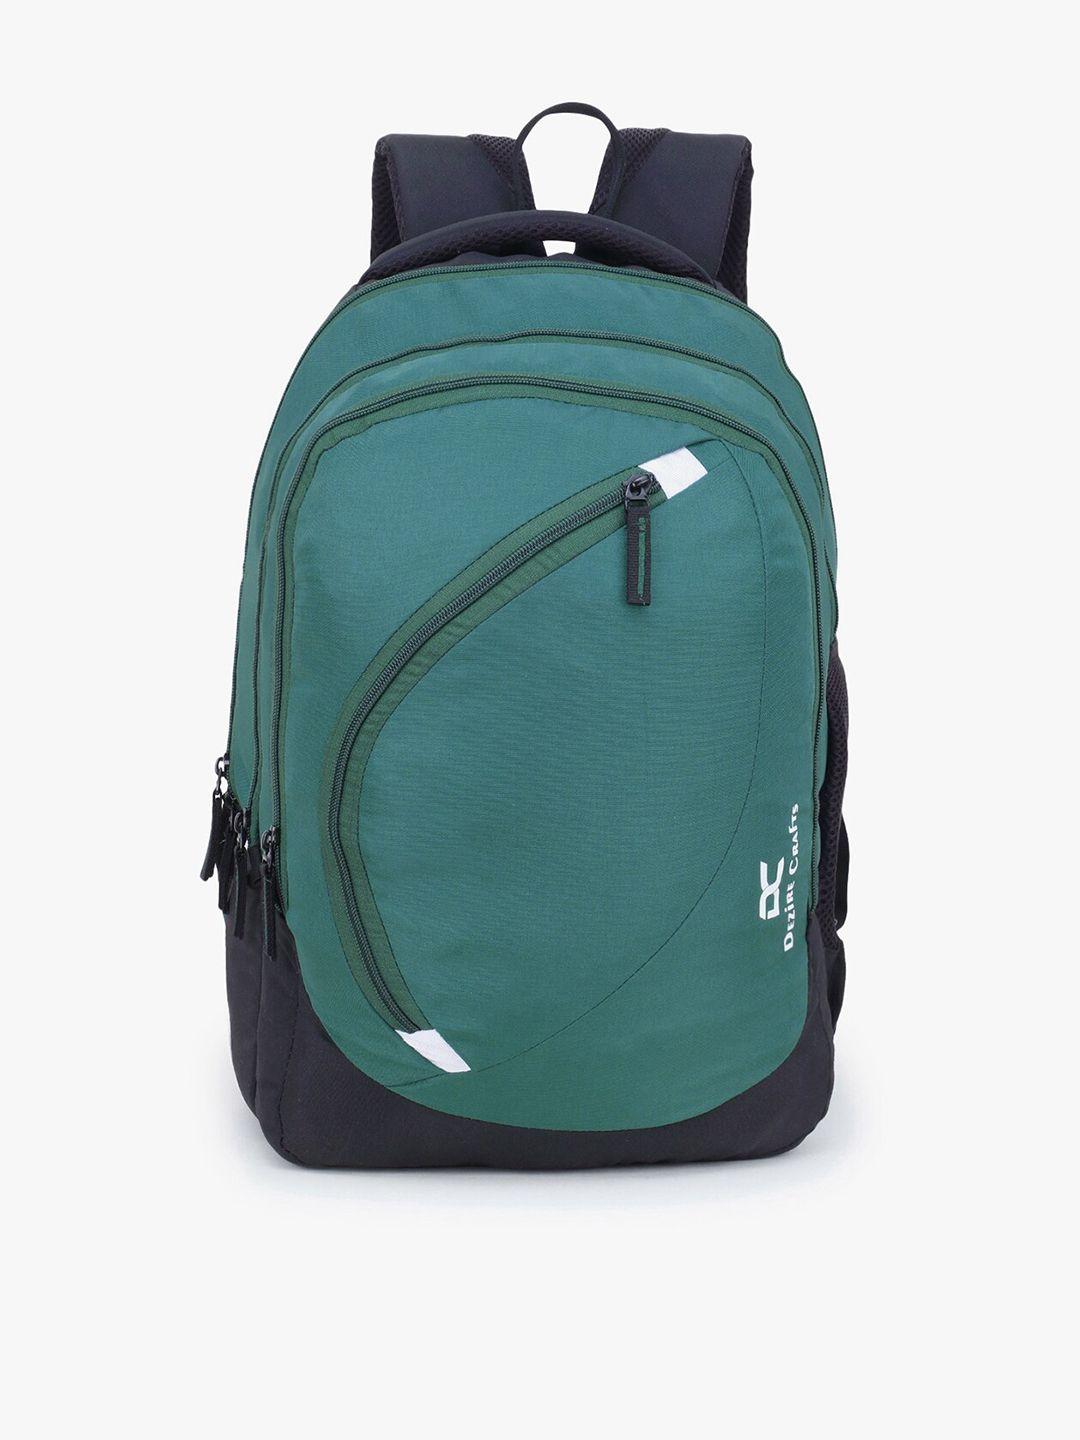 dezire crafts unisex green & black brand logo backpack